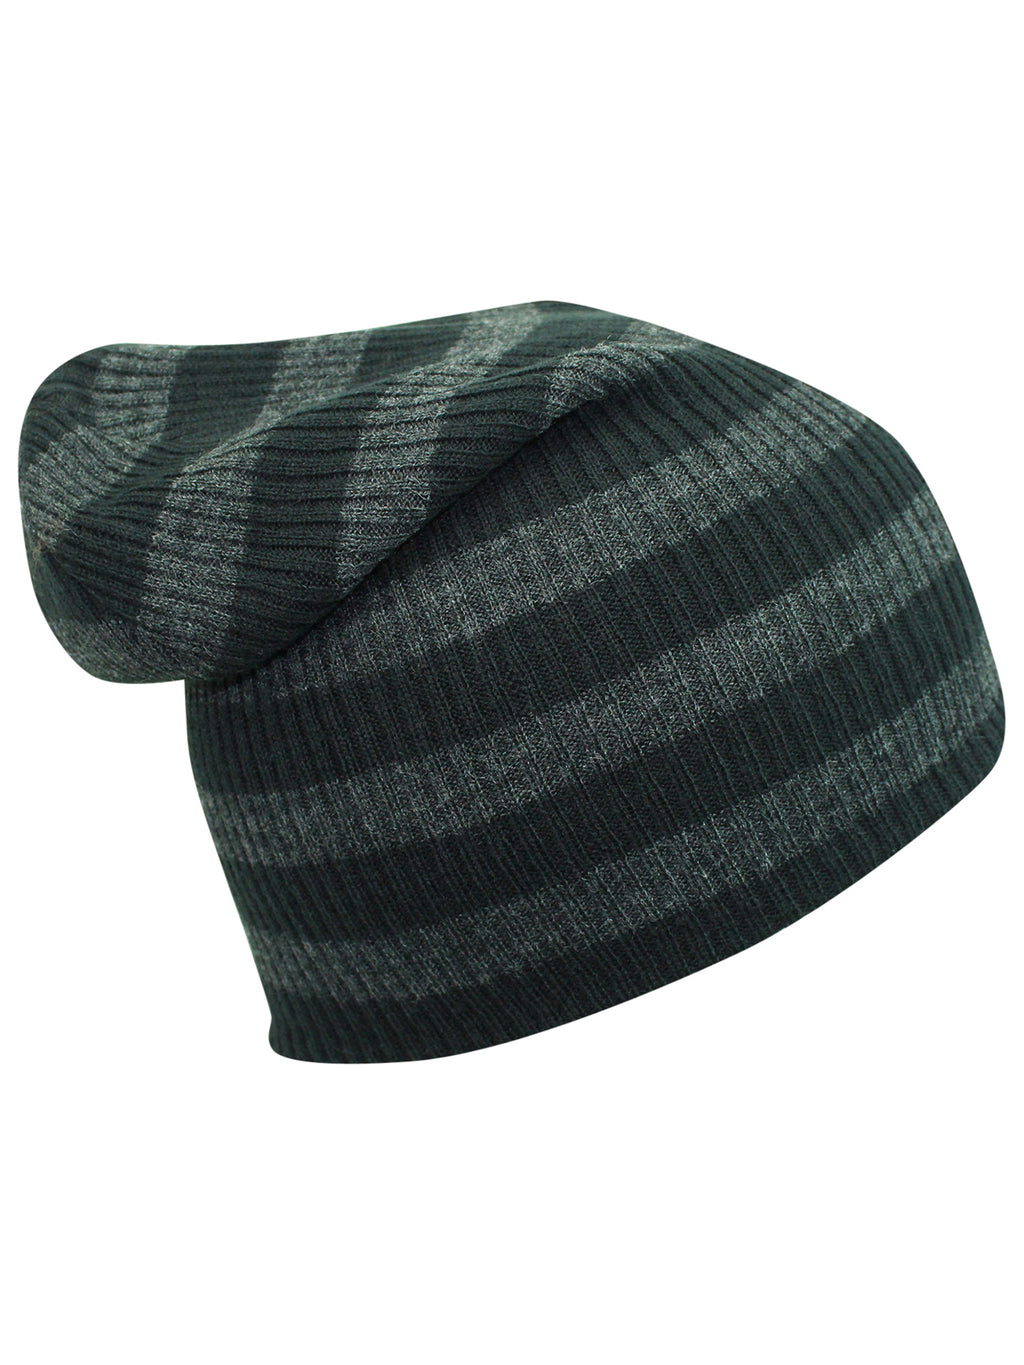 Dark Gray Striped Knit Mega Slouchy Beanie Cap Hat